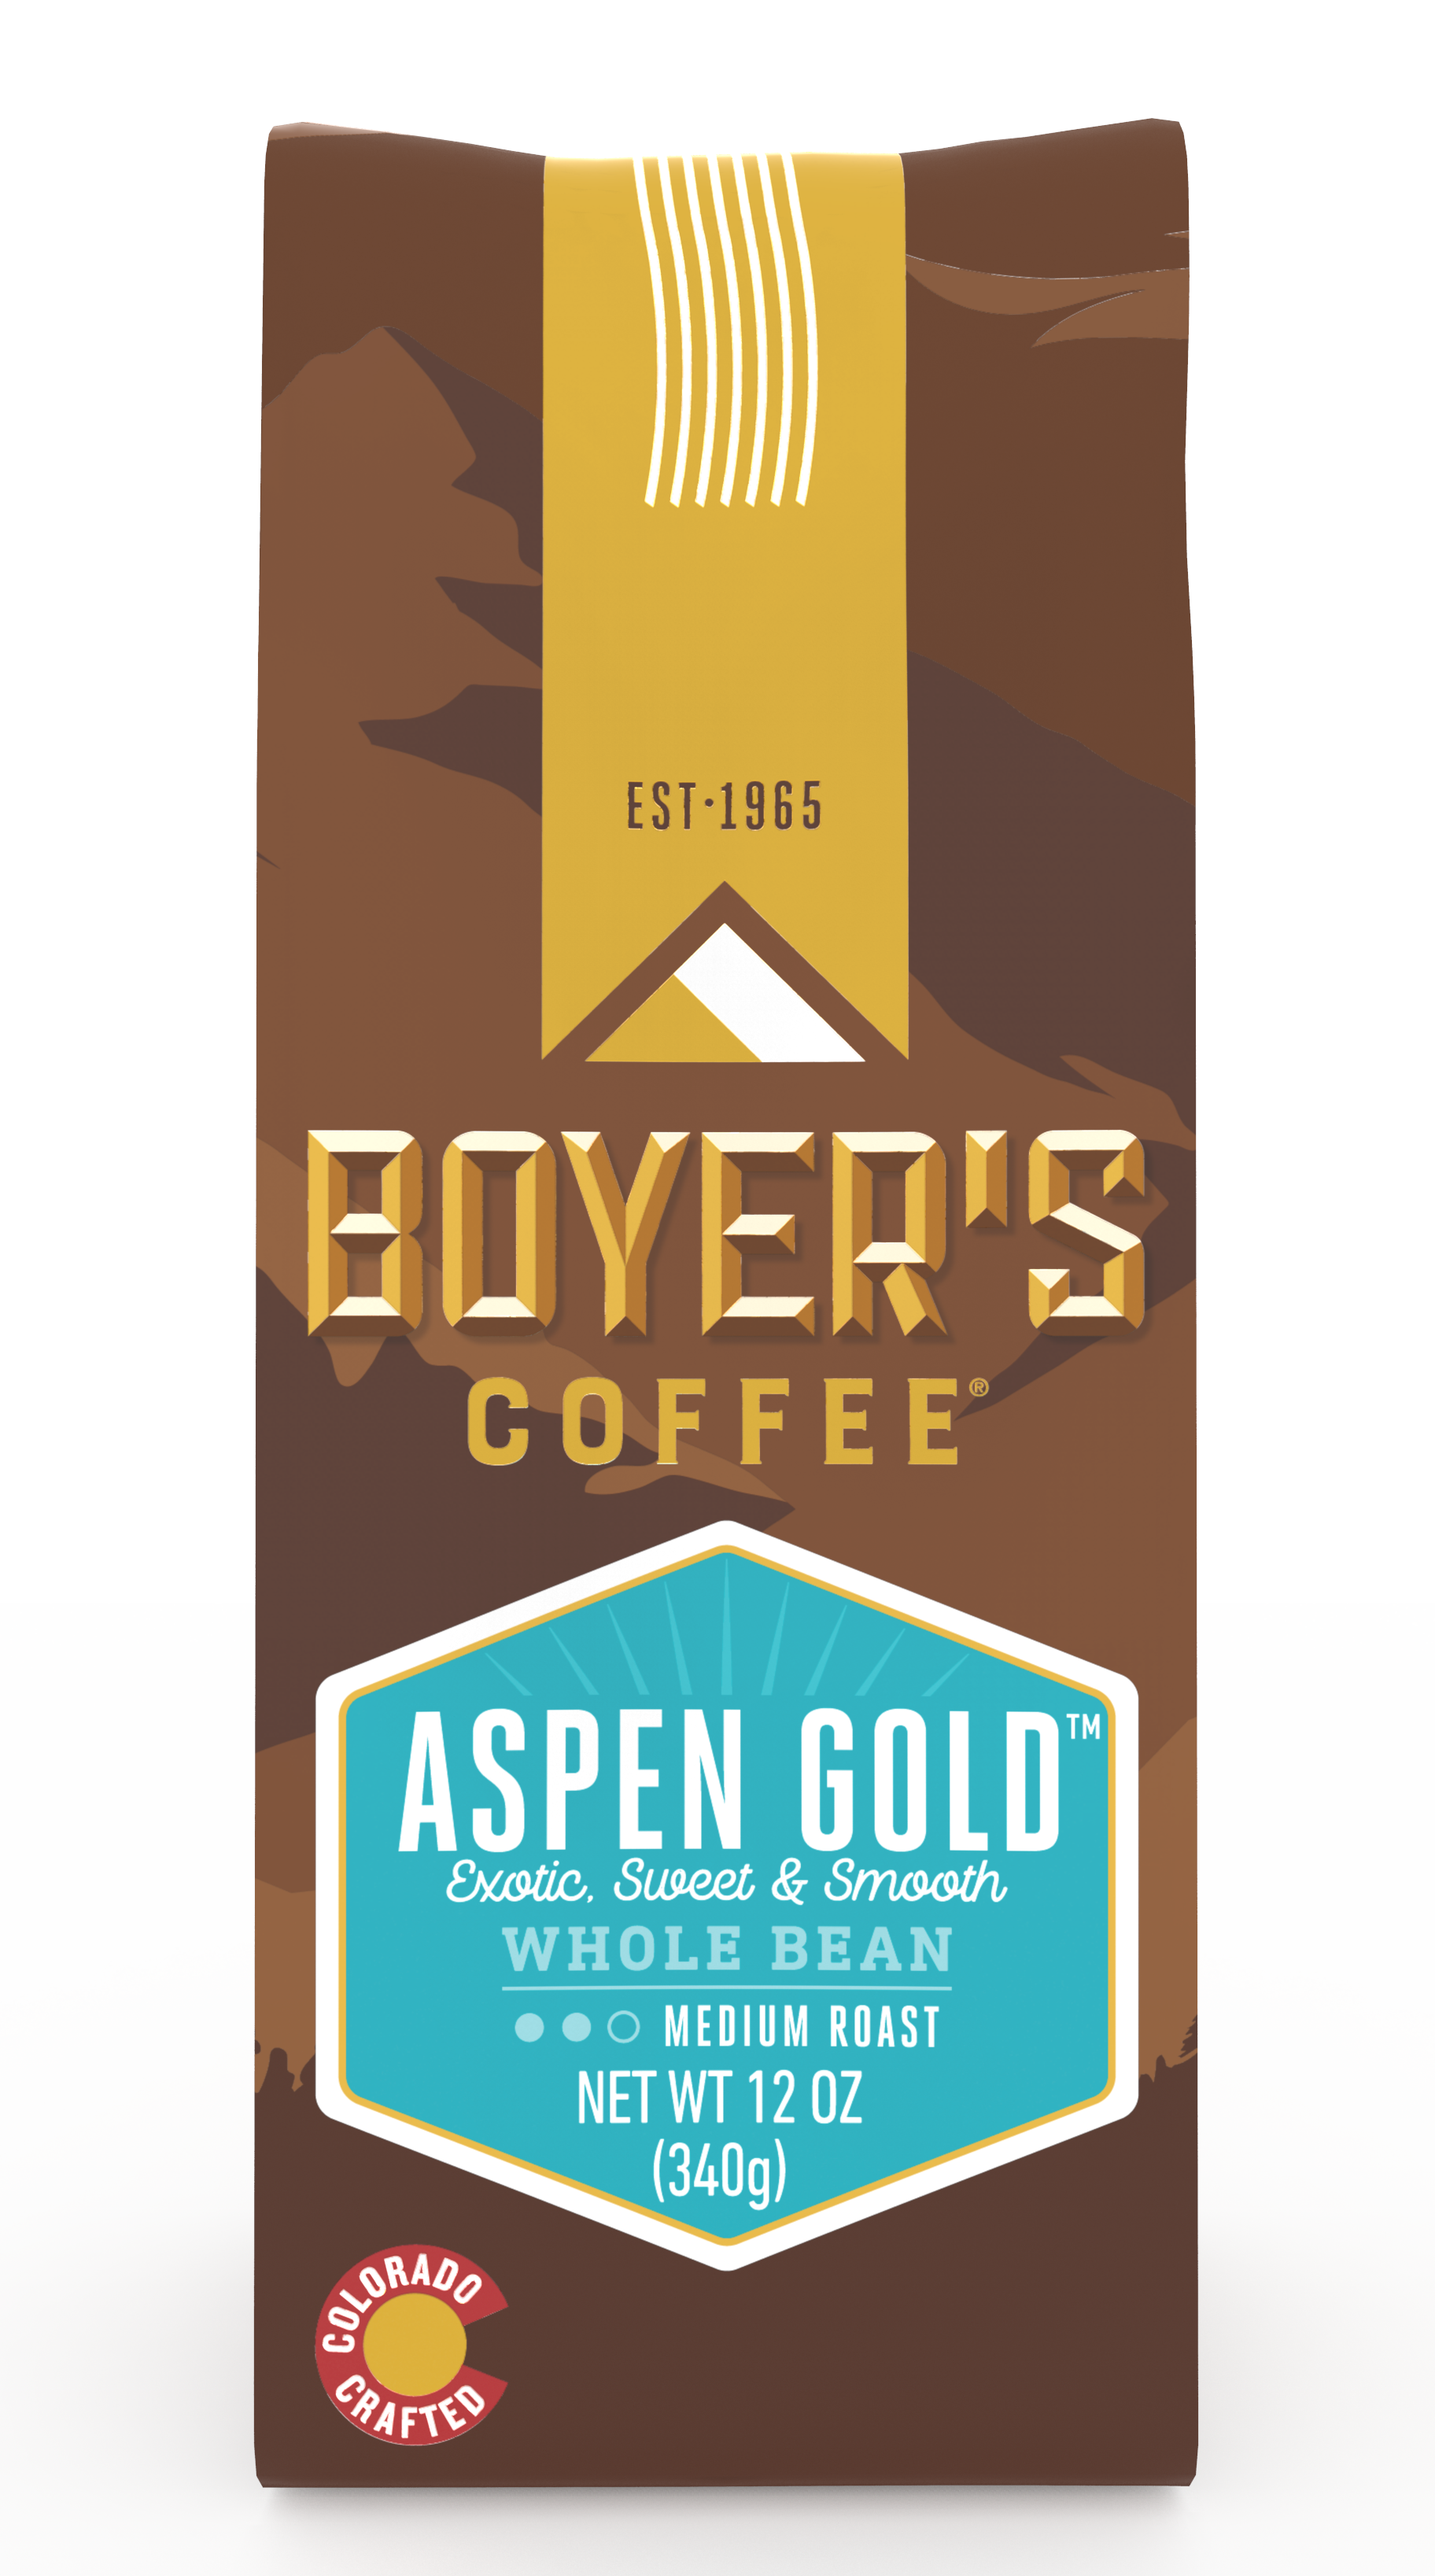 Aspen Gold Coffee